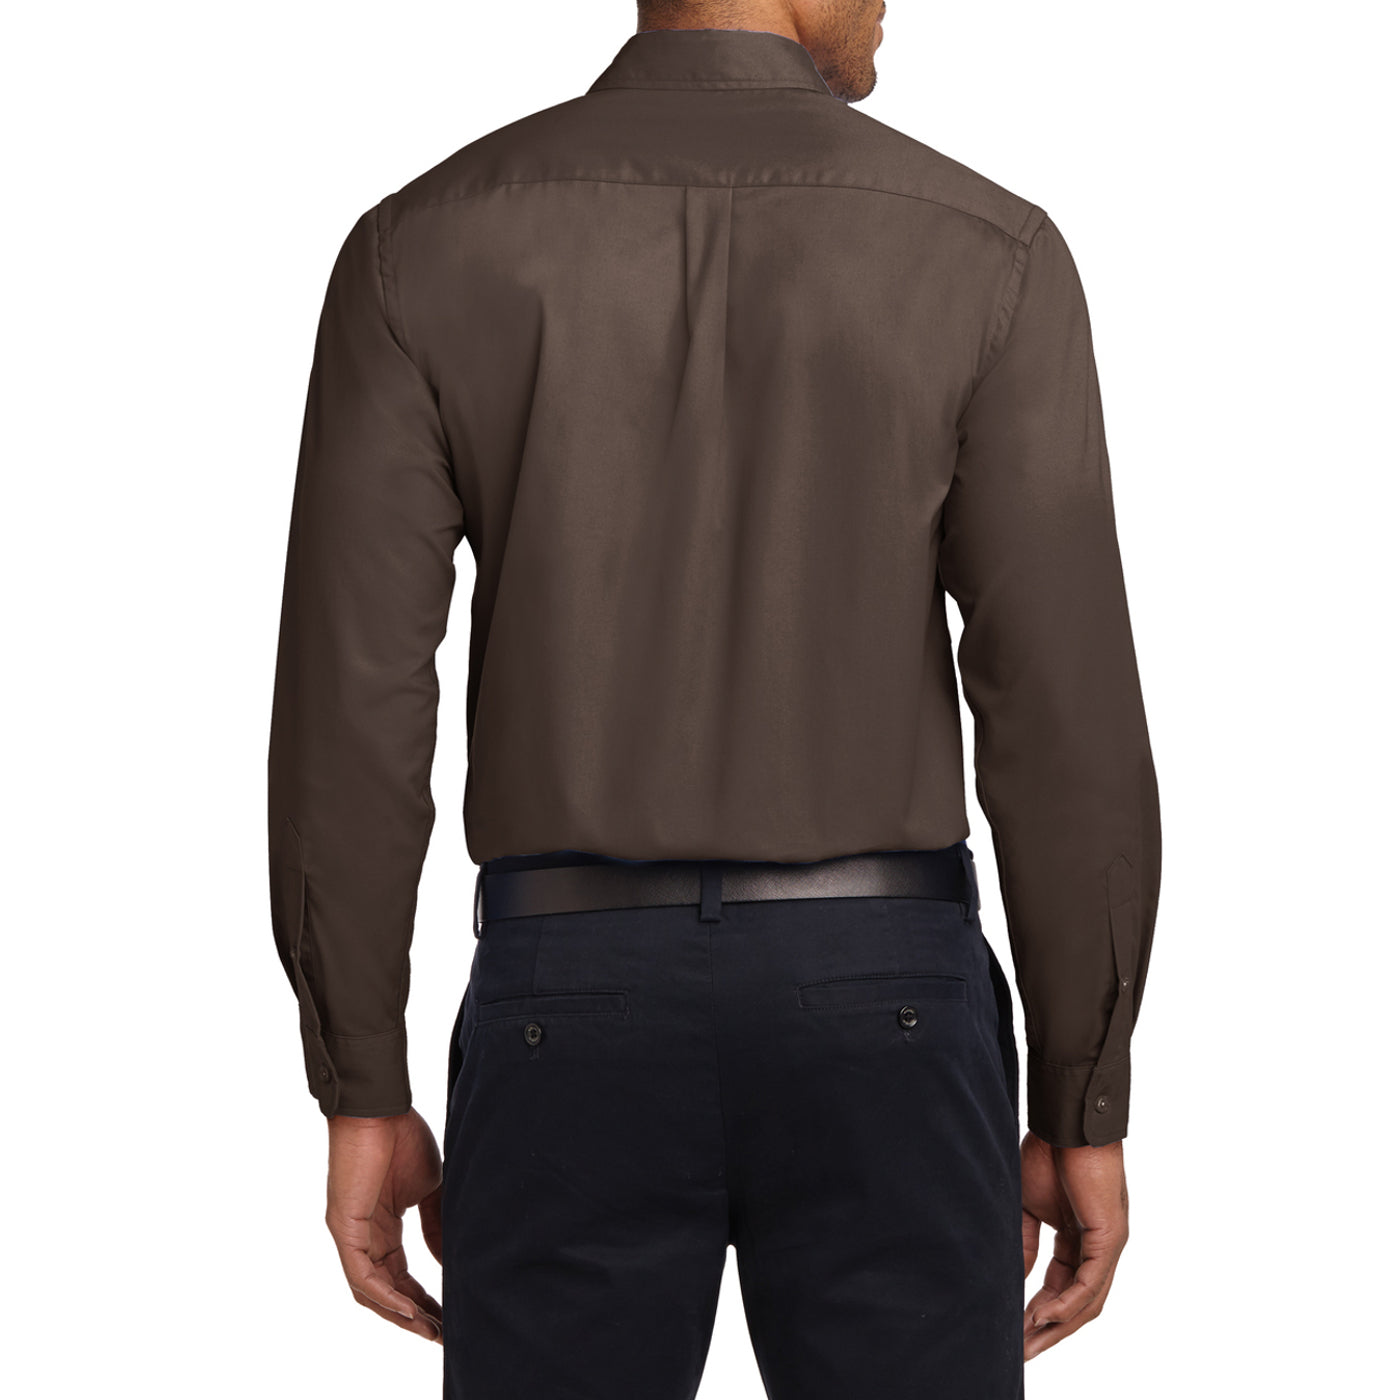 Men's Long Sleeve Easy Care Shirt - Coffee Bean/ Light Stone - Back